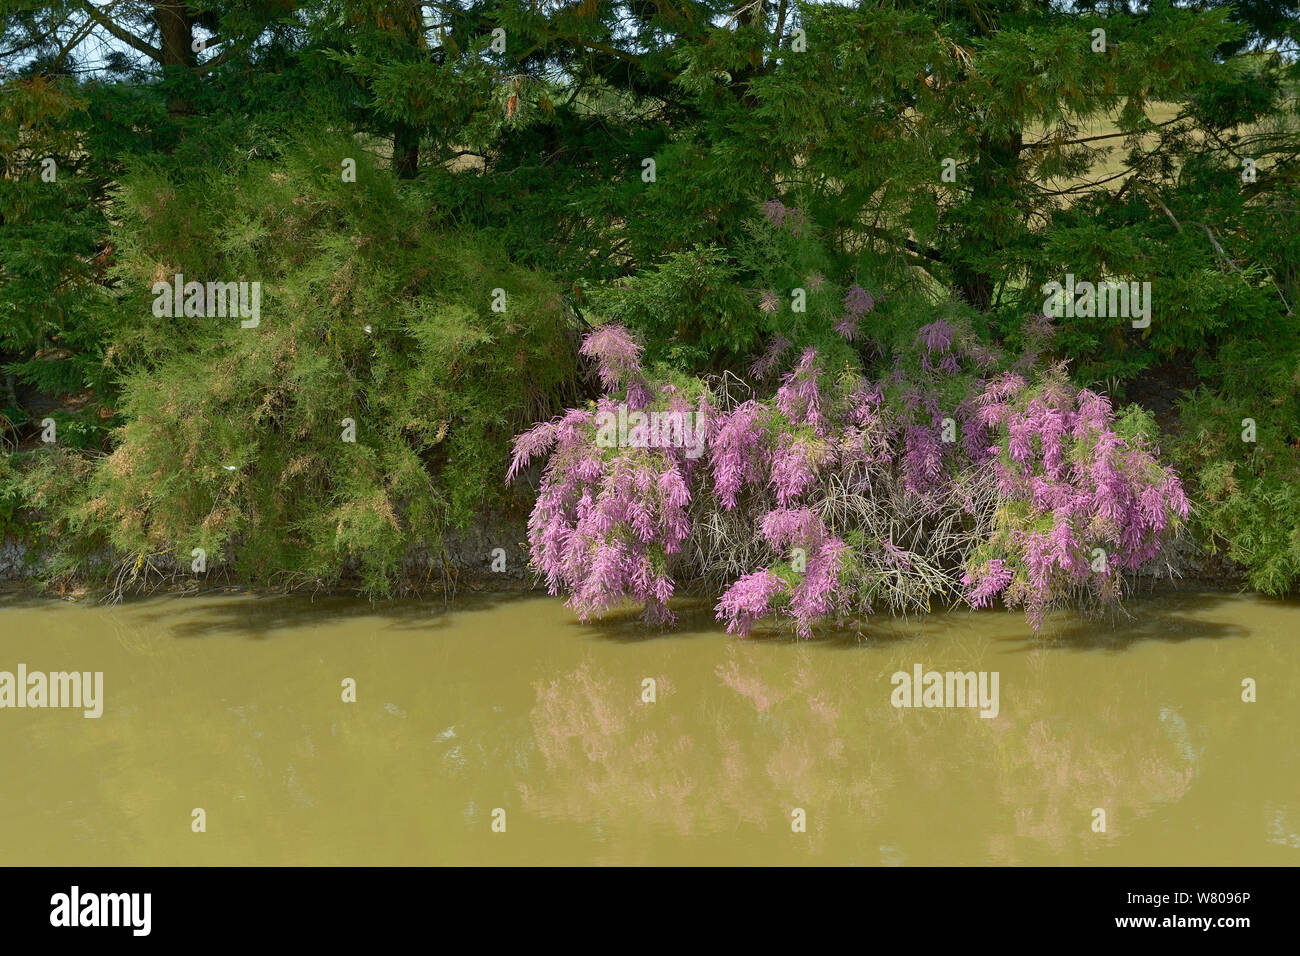 Tamarisk (Tamarix) tree in flower over water, Breton Marsh, France, June. Stock Photo